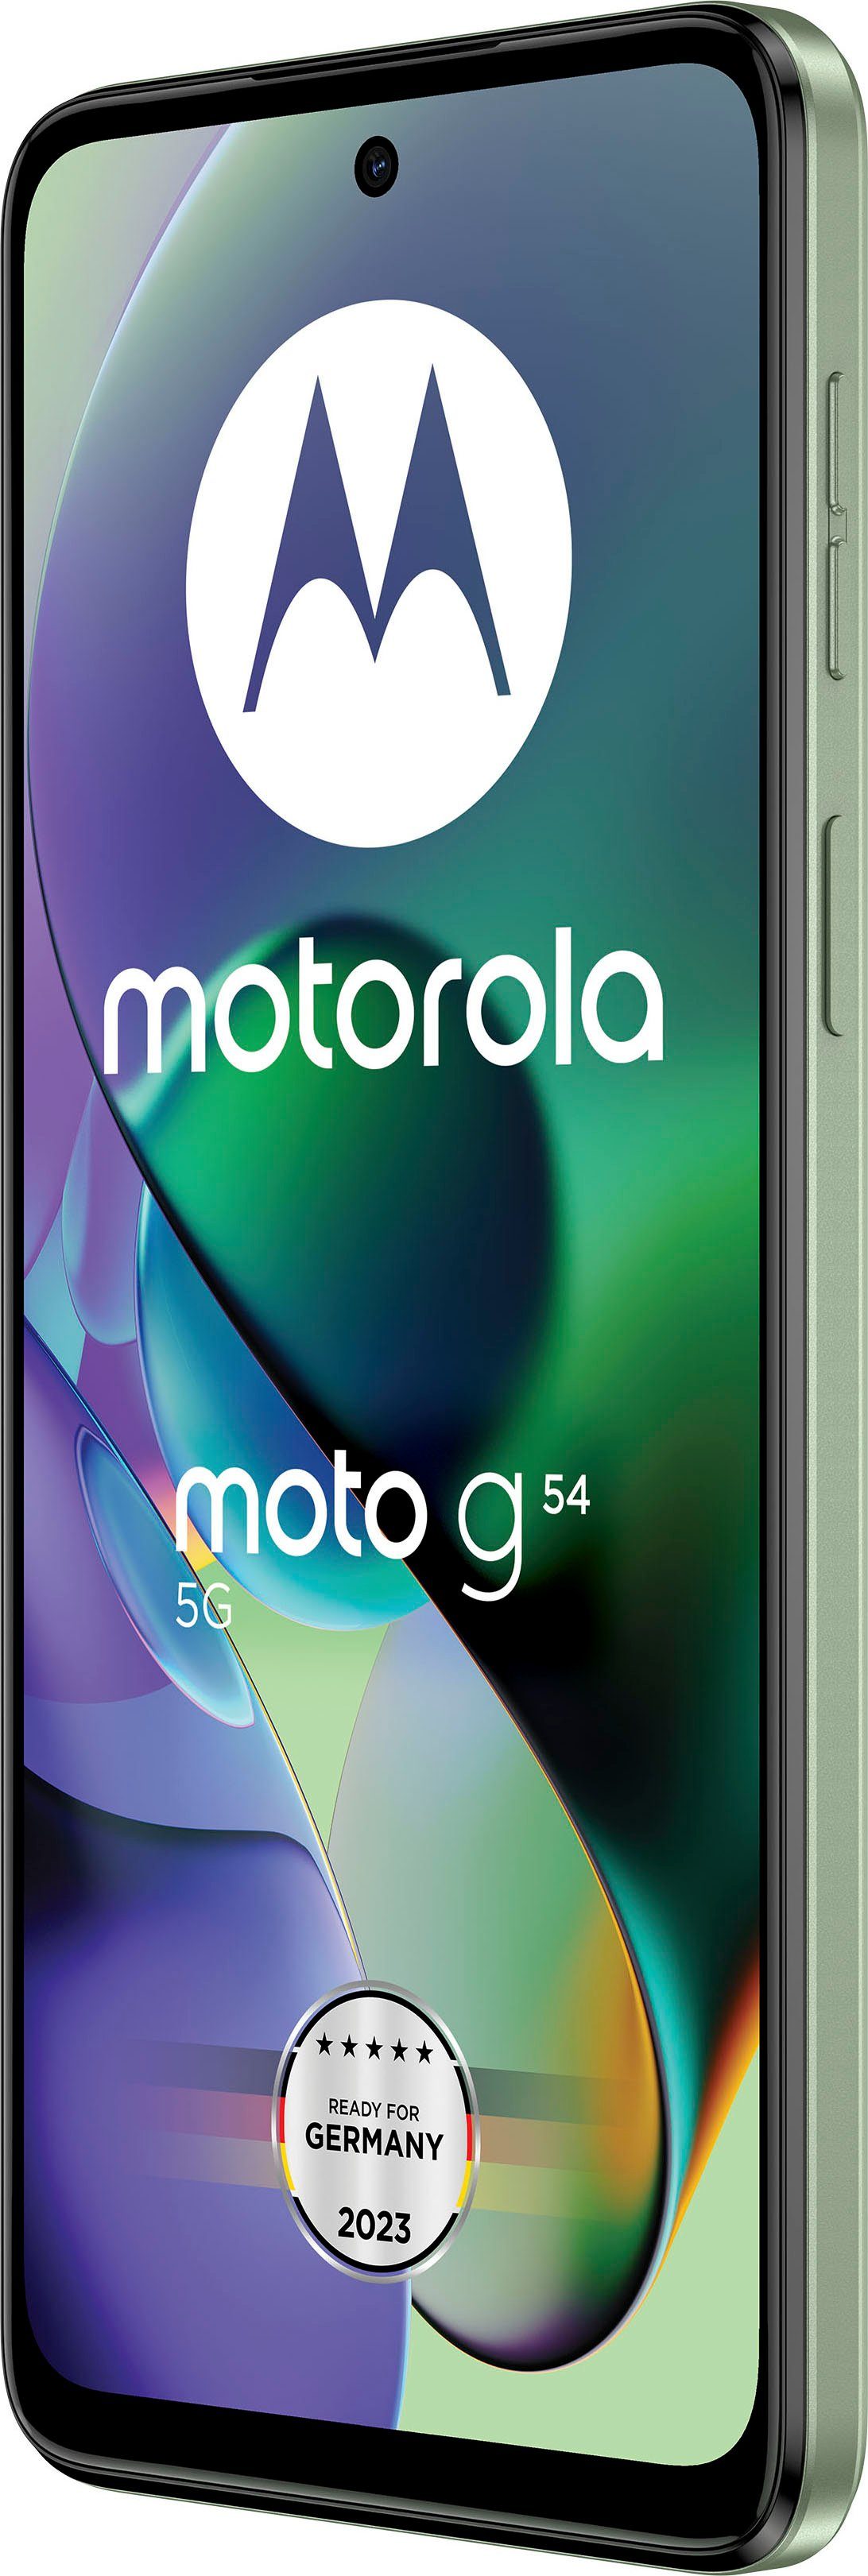 cm/6,5 50 MP grün Zoll, Kamera) moto Smartphone g54 GB (16,51 Motorola mint 256 Speicherplatz,